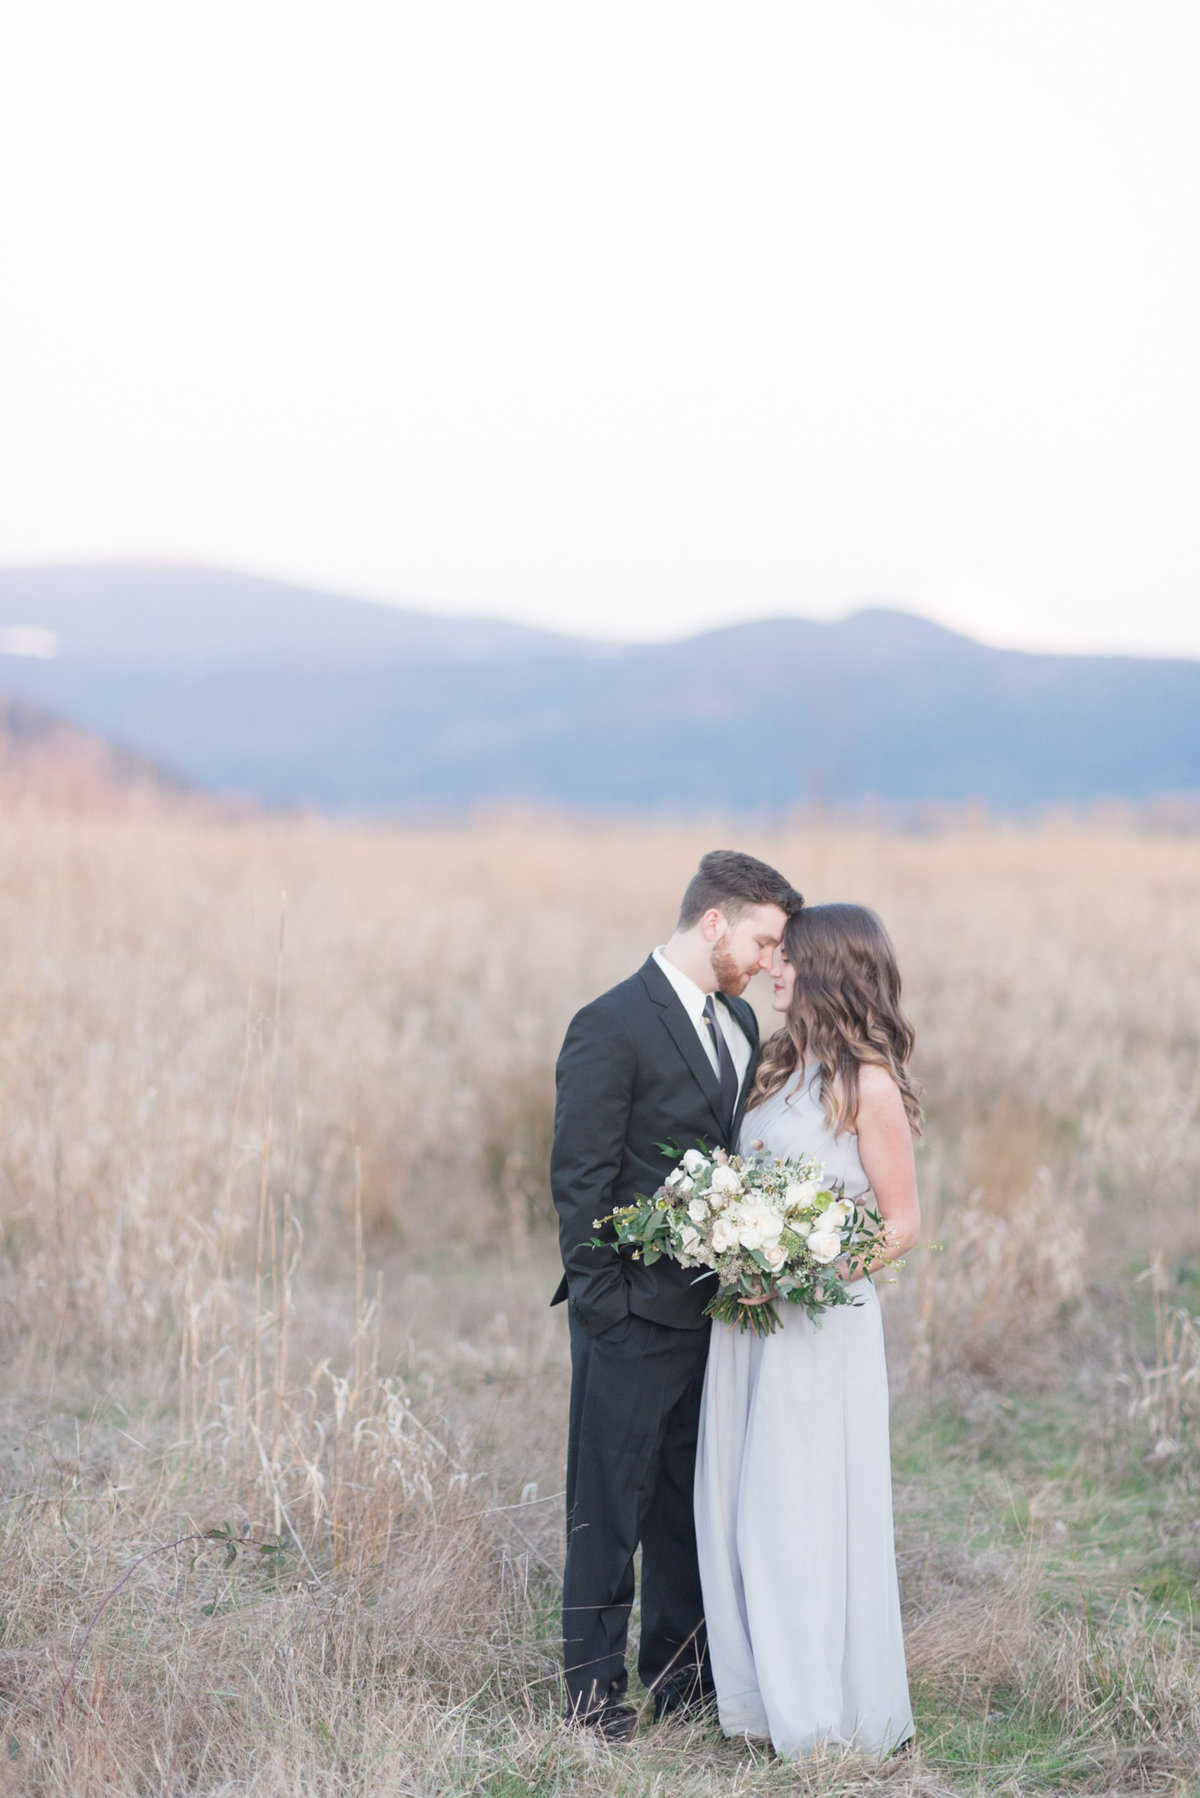 Kalahan and Sean Photography Wedding Engagement Photographer Portland Oregon Light Airy Destination Luxury15